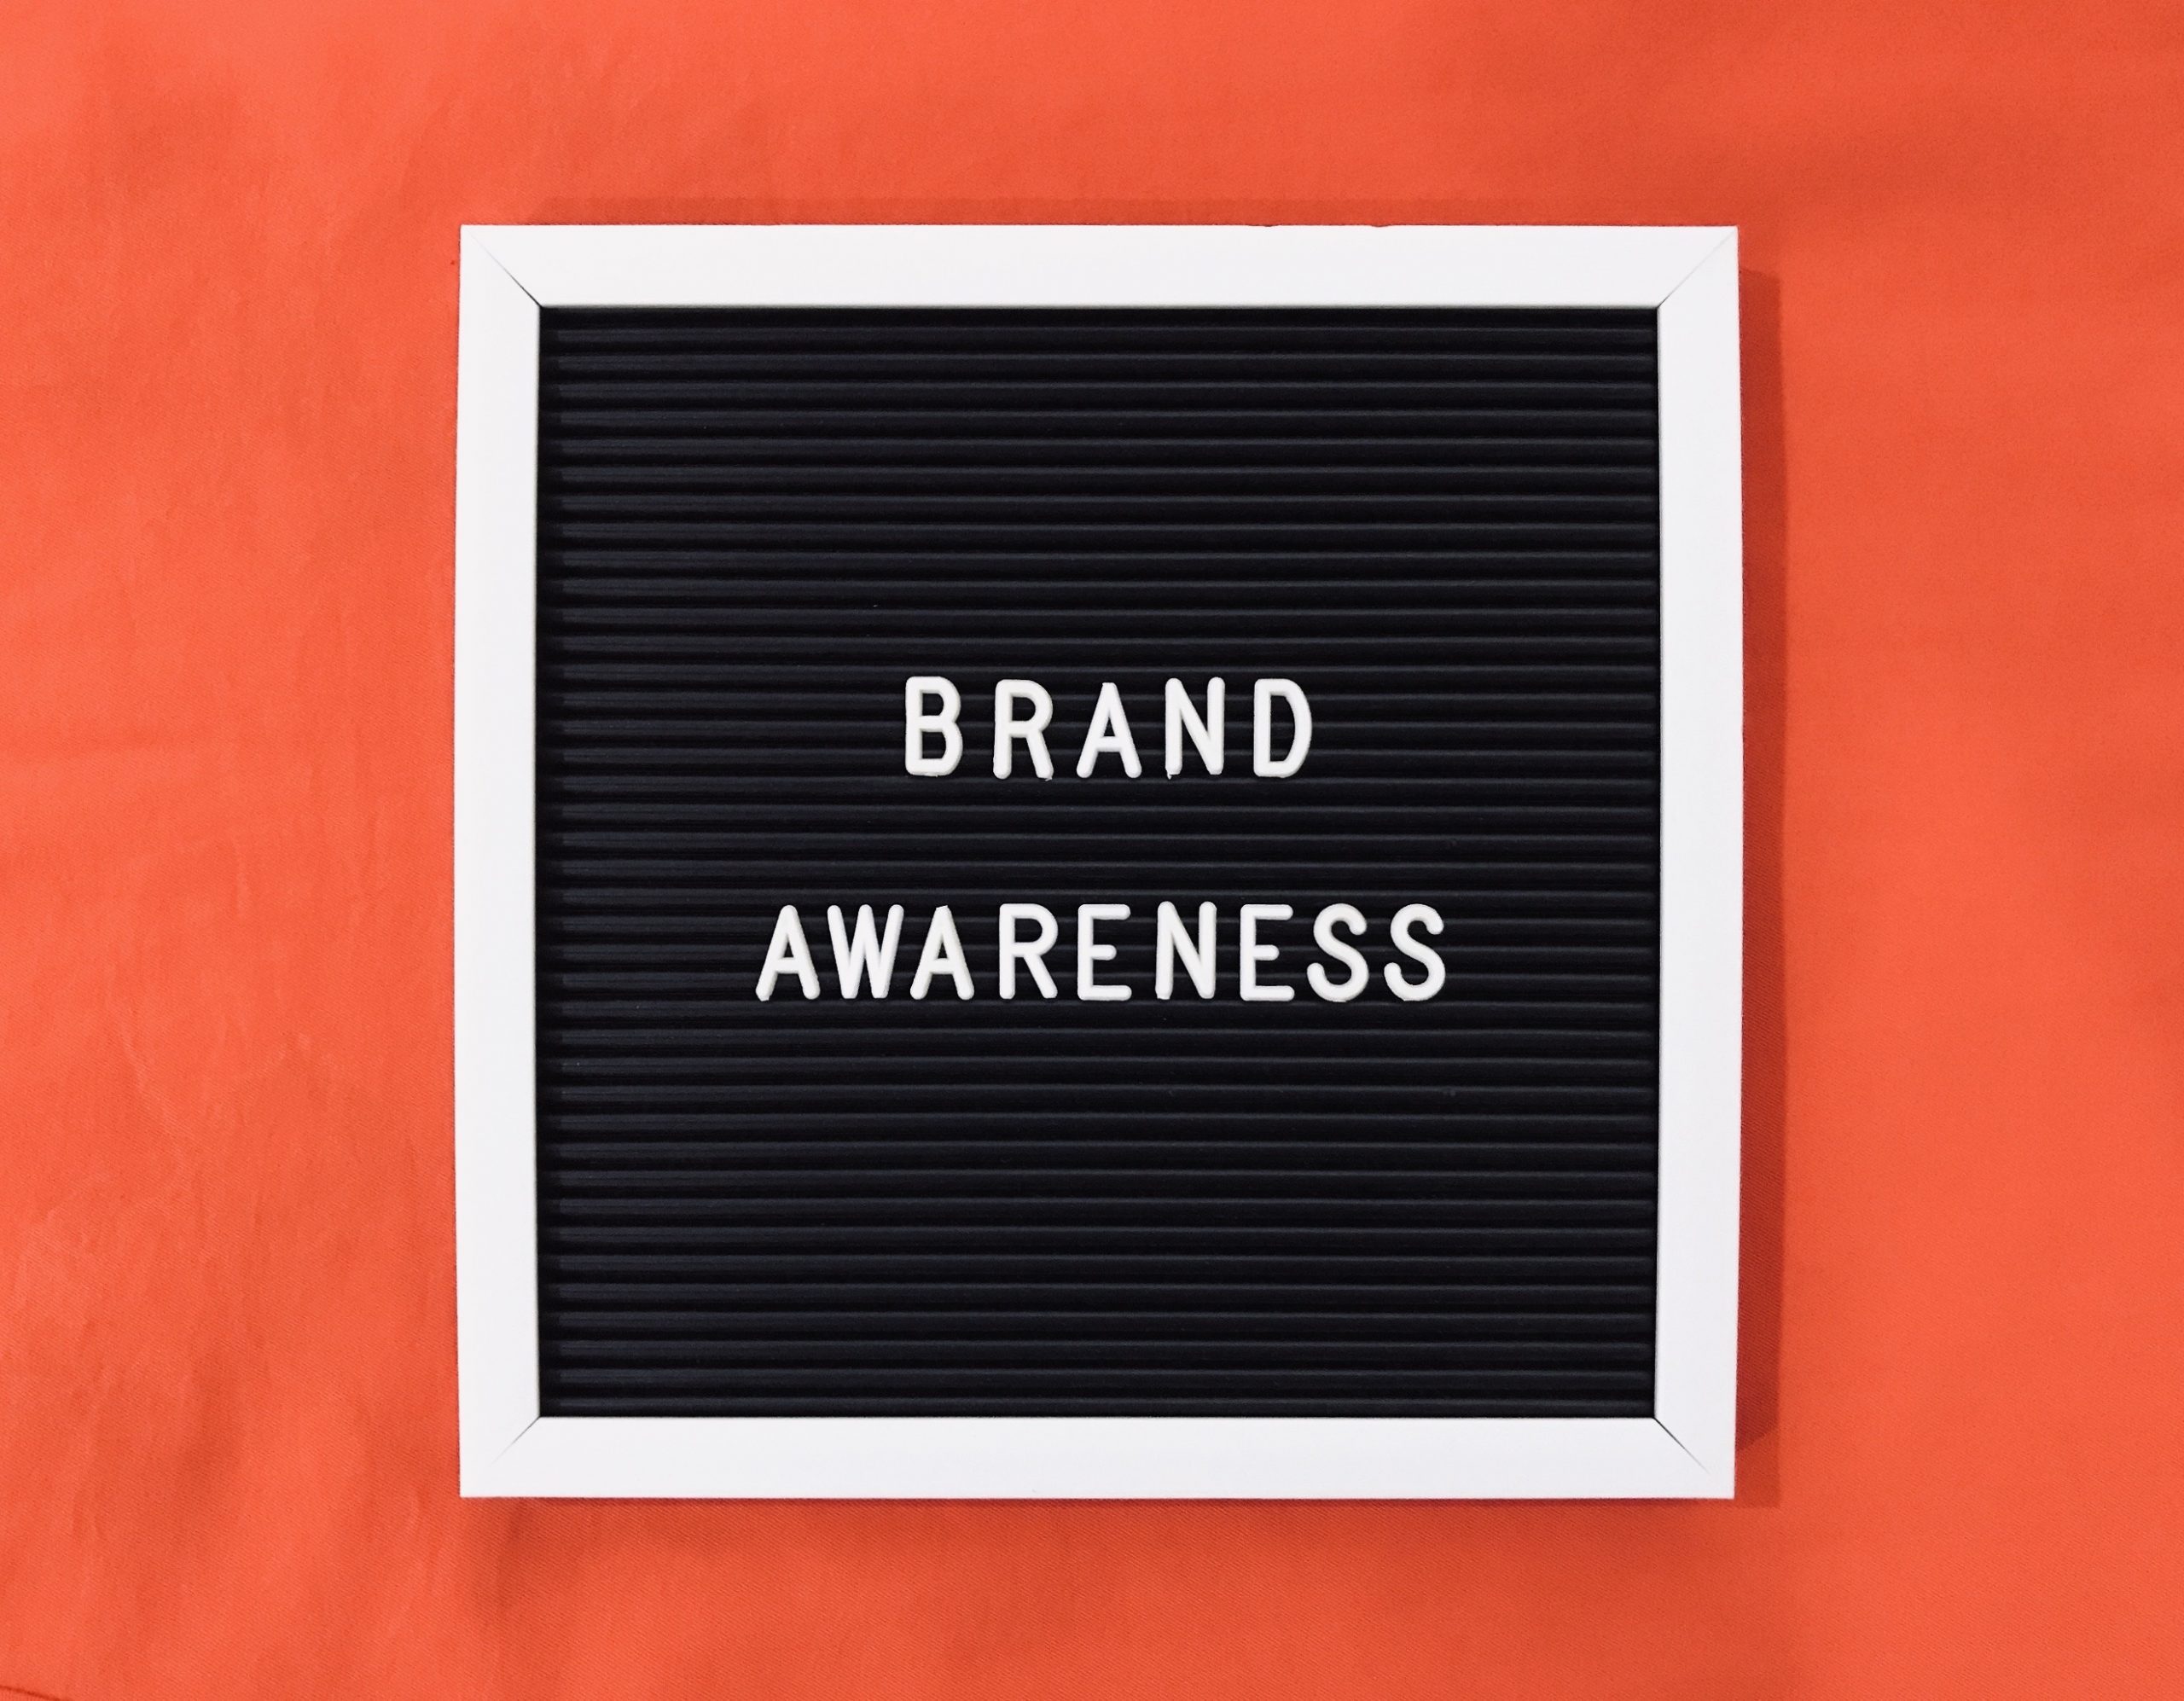 brand-awareness-on-orange-background-2022-10-26-05-23-42-utc